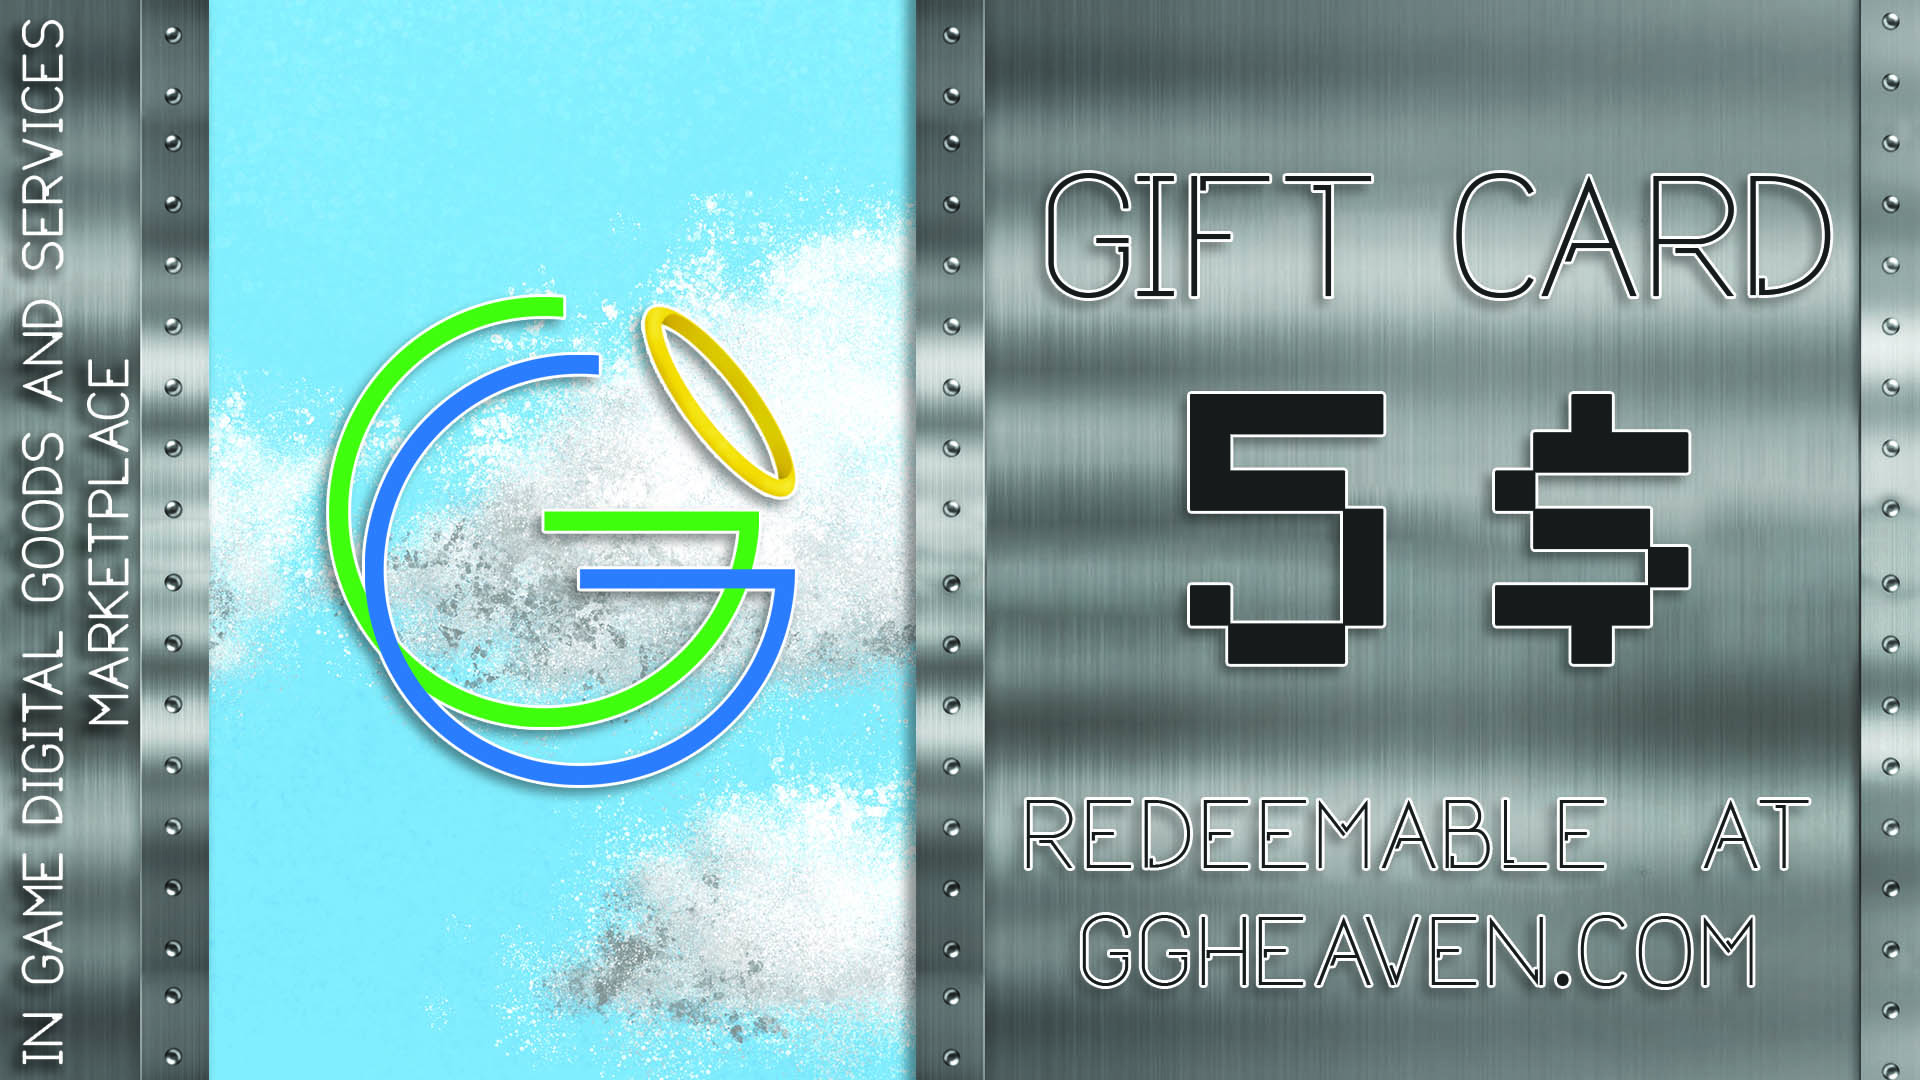 GGHeaven.com 5$ Gift Card, 6.27 usd